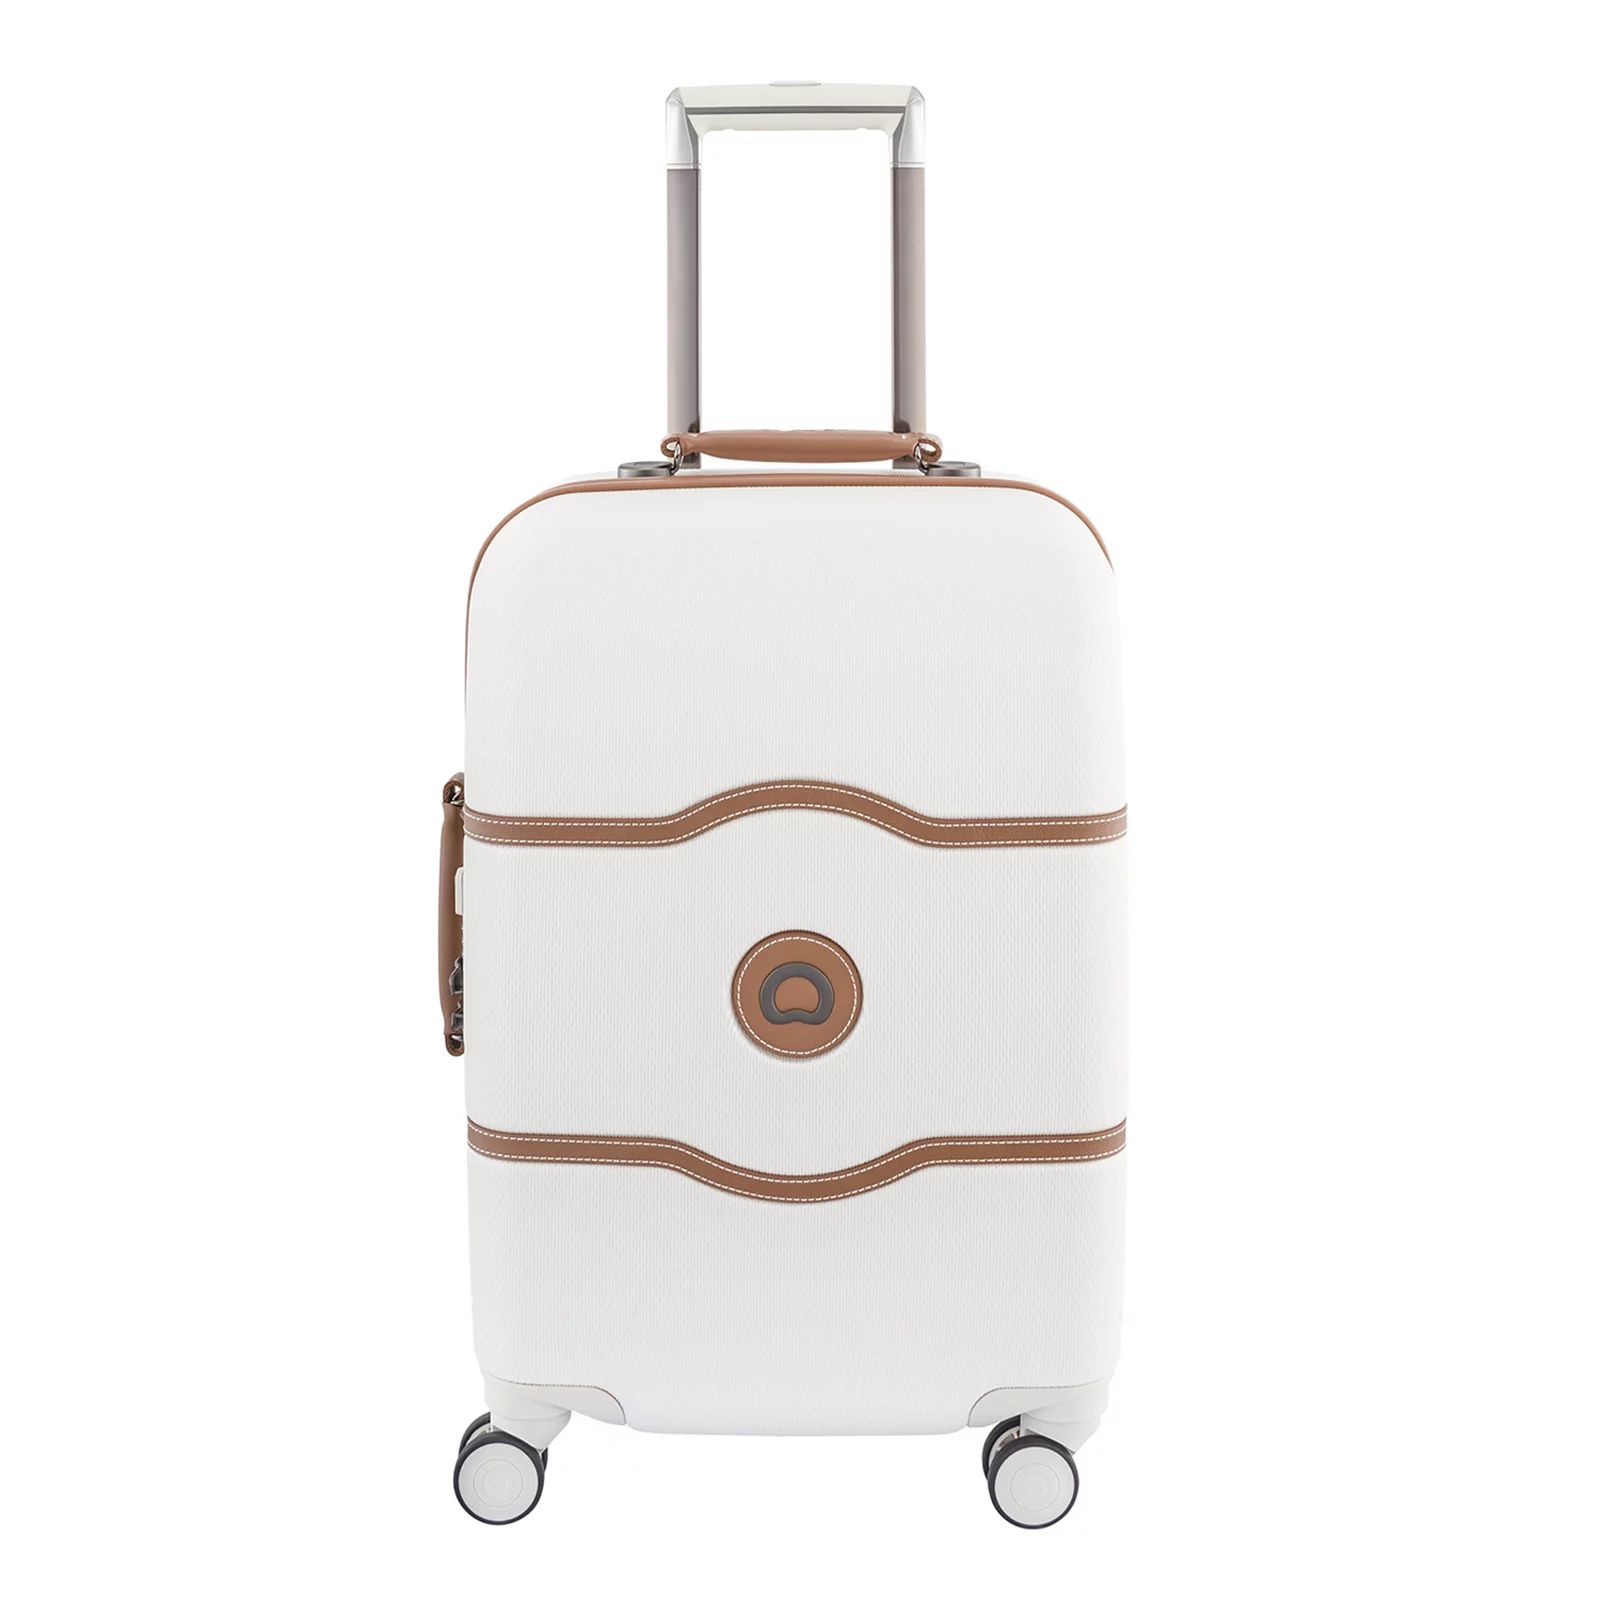 Delsey Chatelet Hardside Spinner Luggage, Pink, 28 INCH | Kohl's